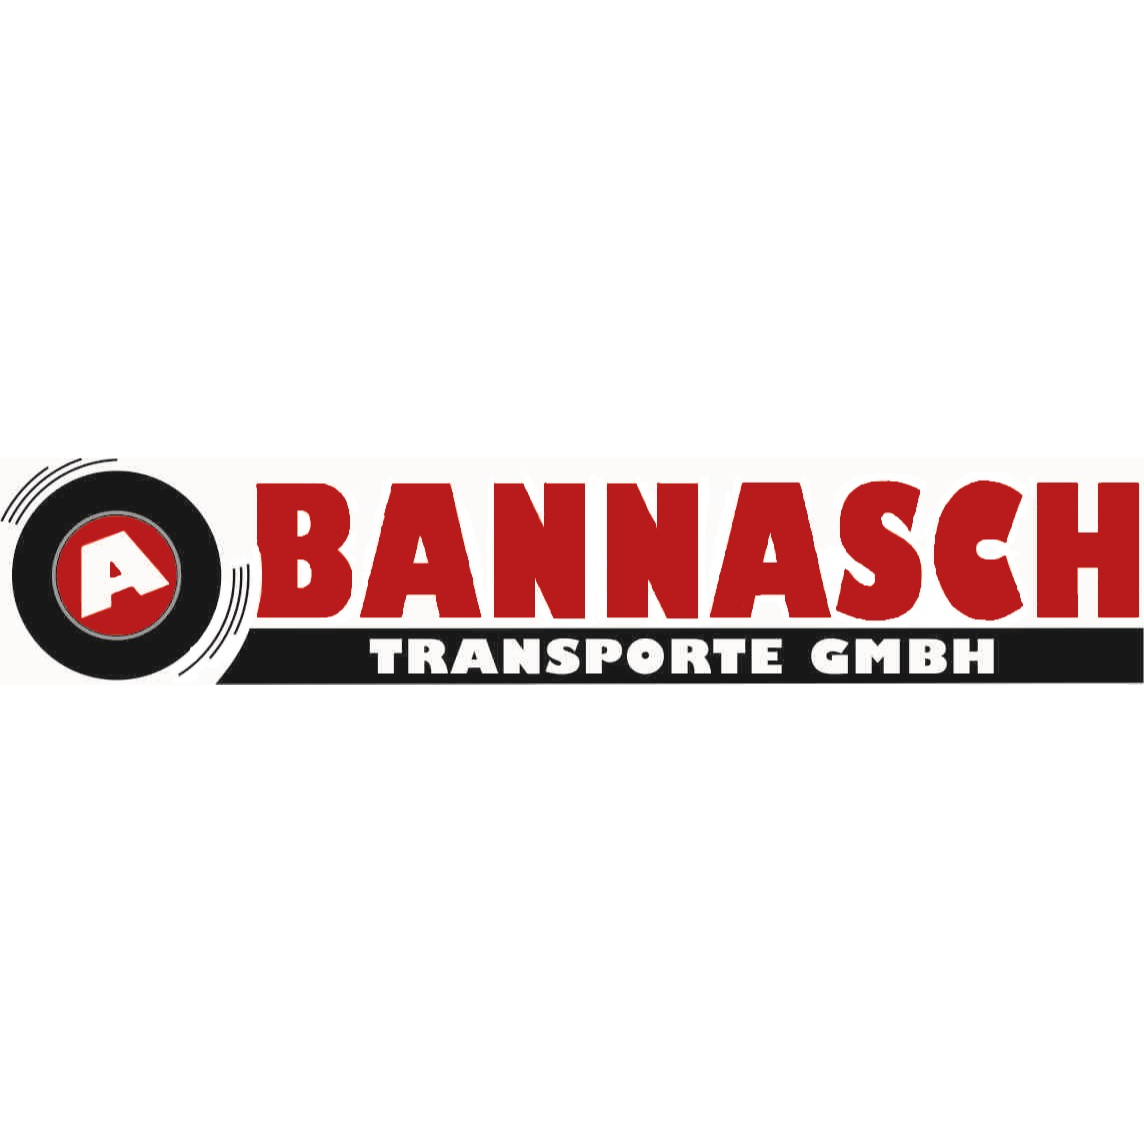 Arthur Bannasch Transporte GmbH in Wyhl am Kaiserstuhl - Logo